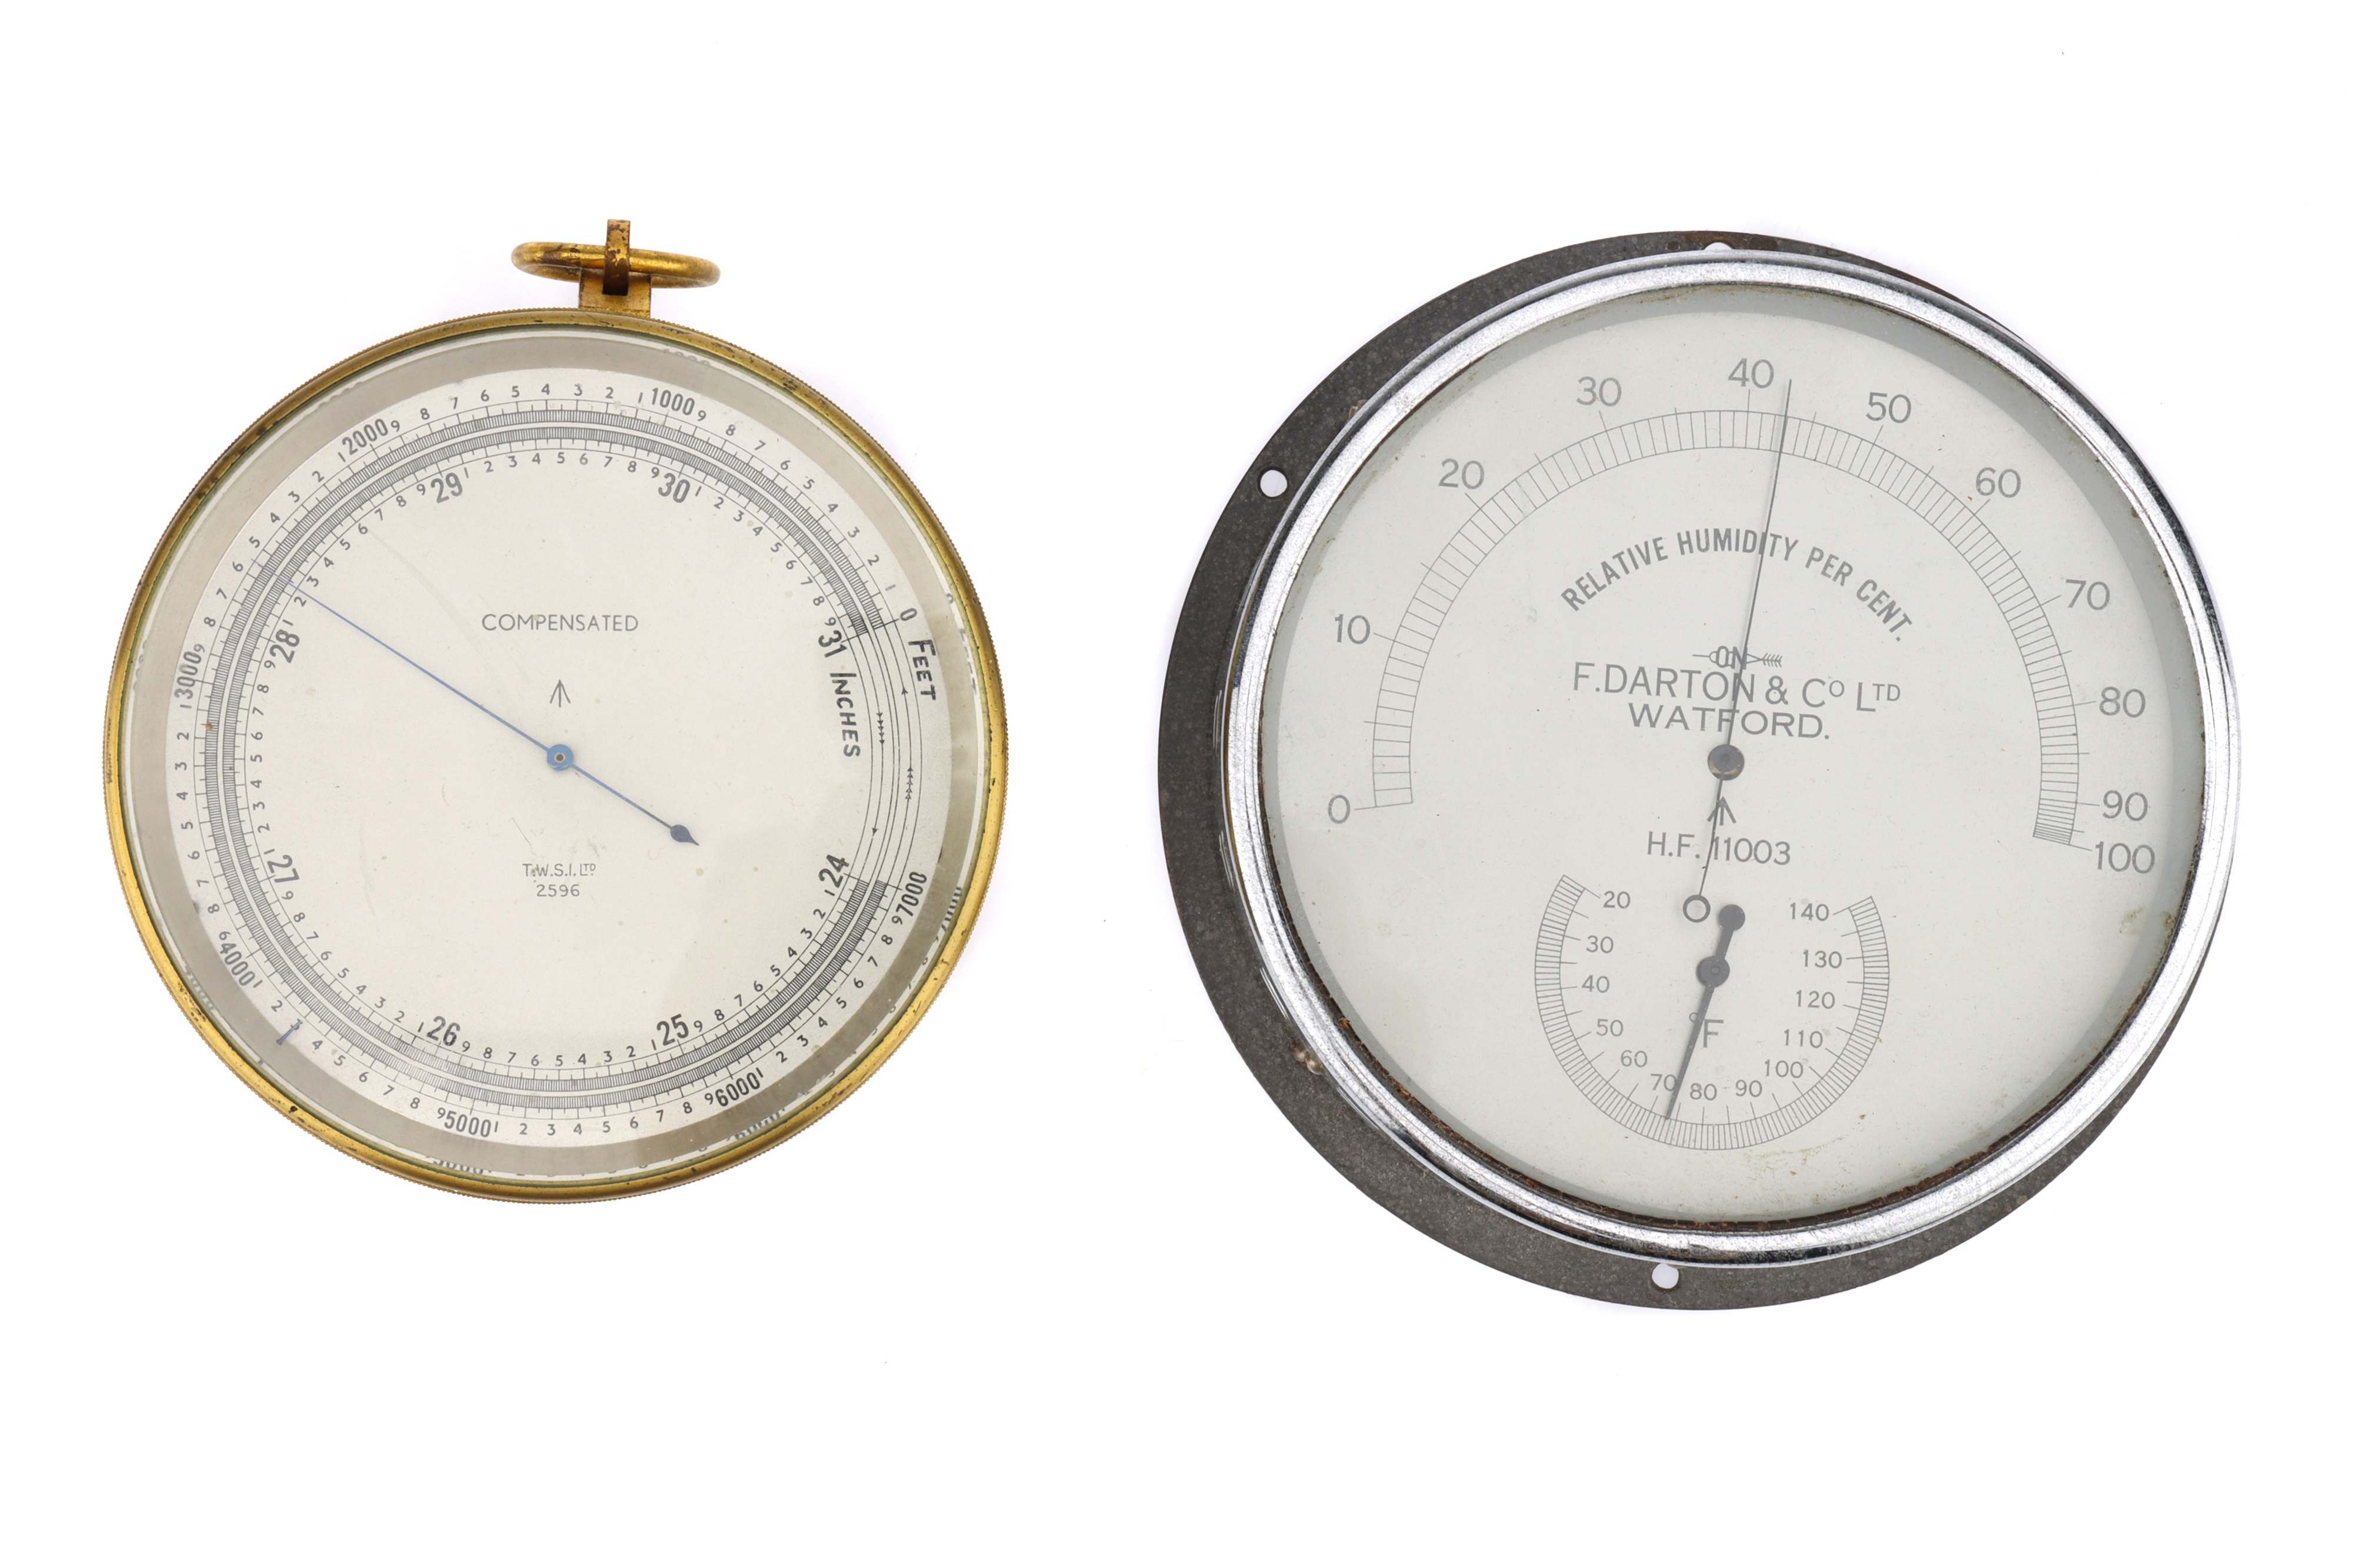 F. Darton & Co. Ltd. Military Hygrometer Thermometer,